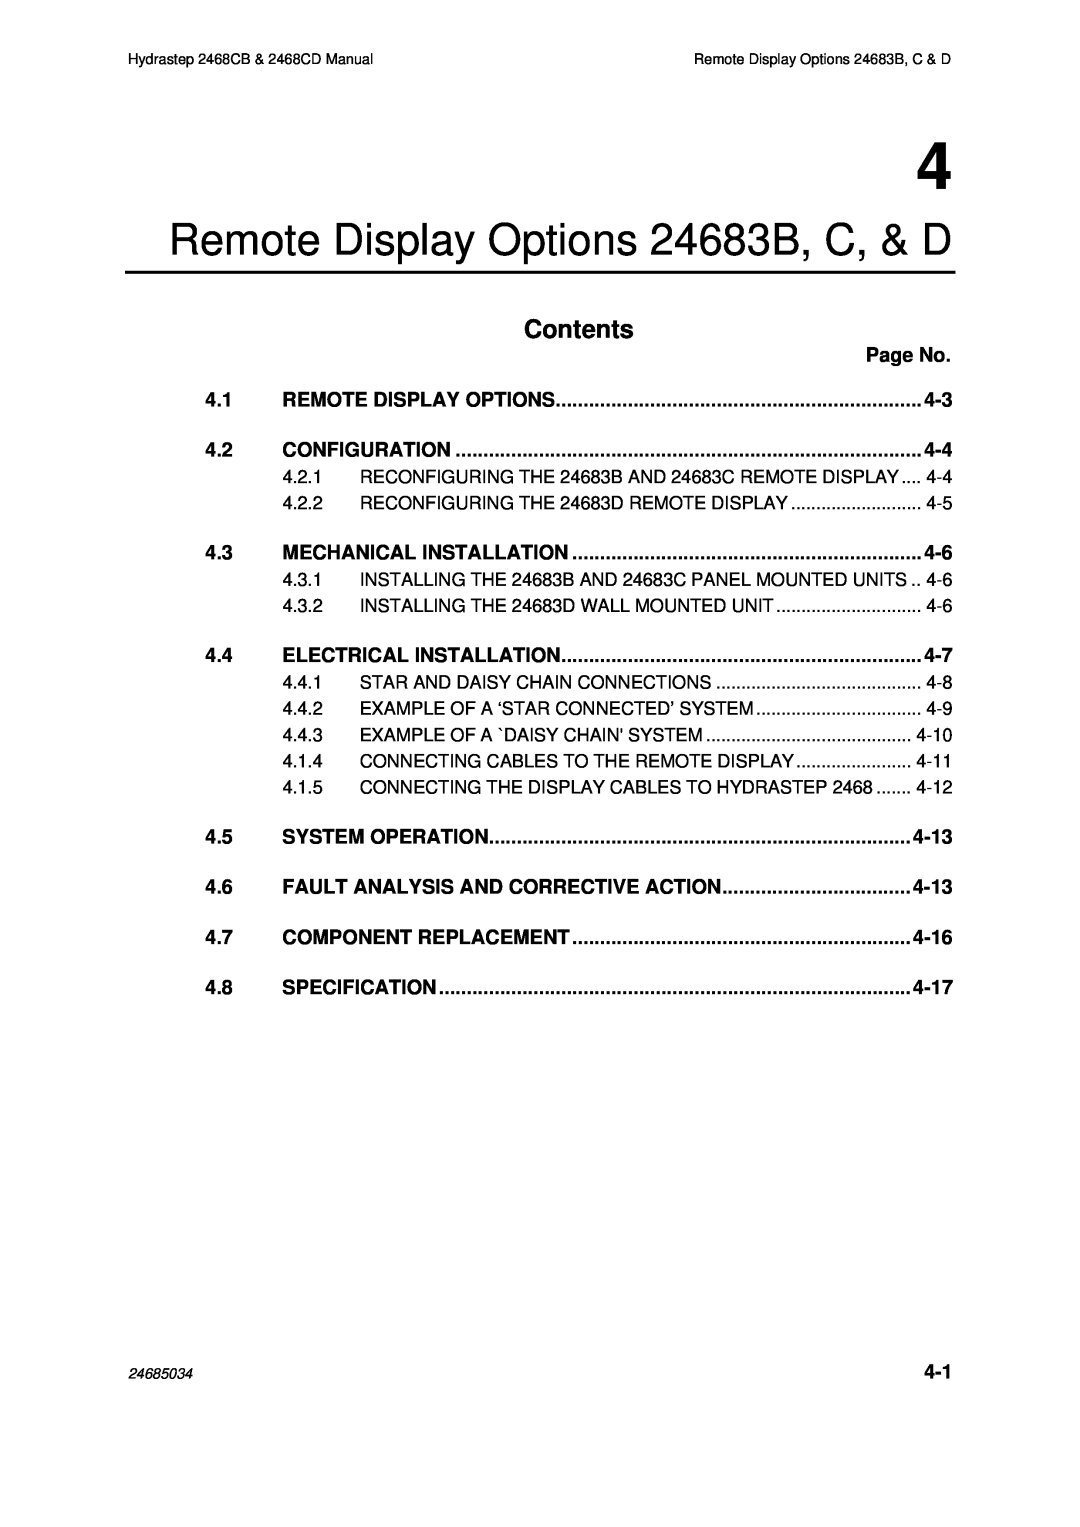 Emerson 2468CD, 2468CB manual Remote Display Options 24683B, C, & D, Contents 